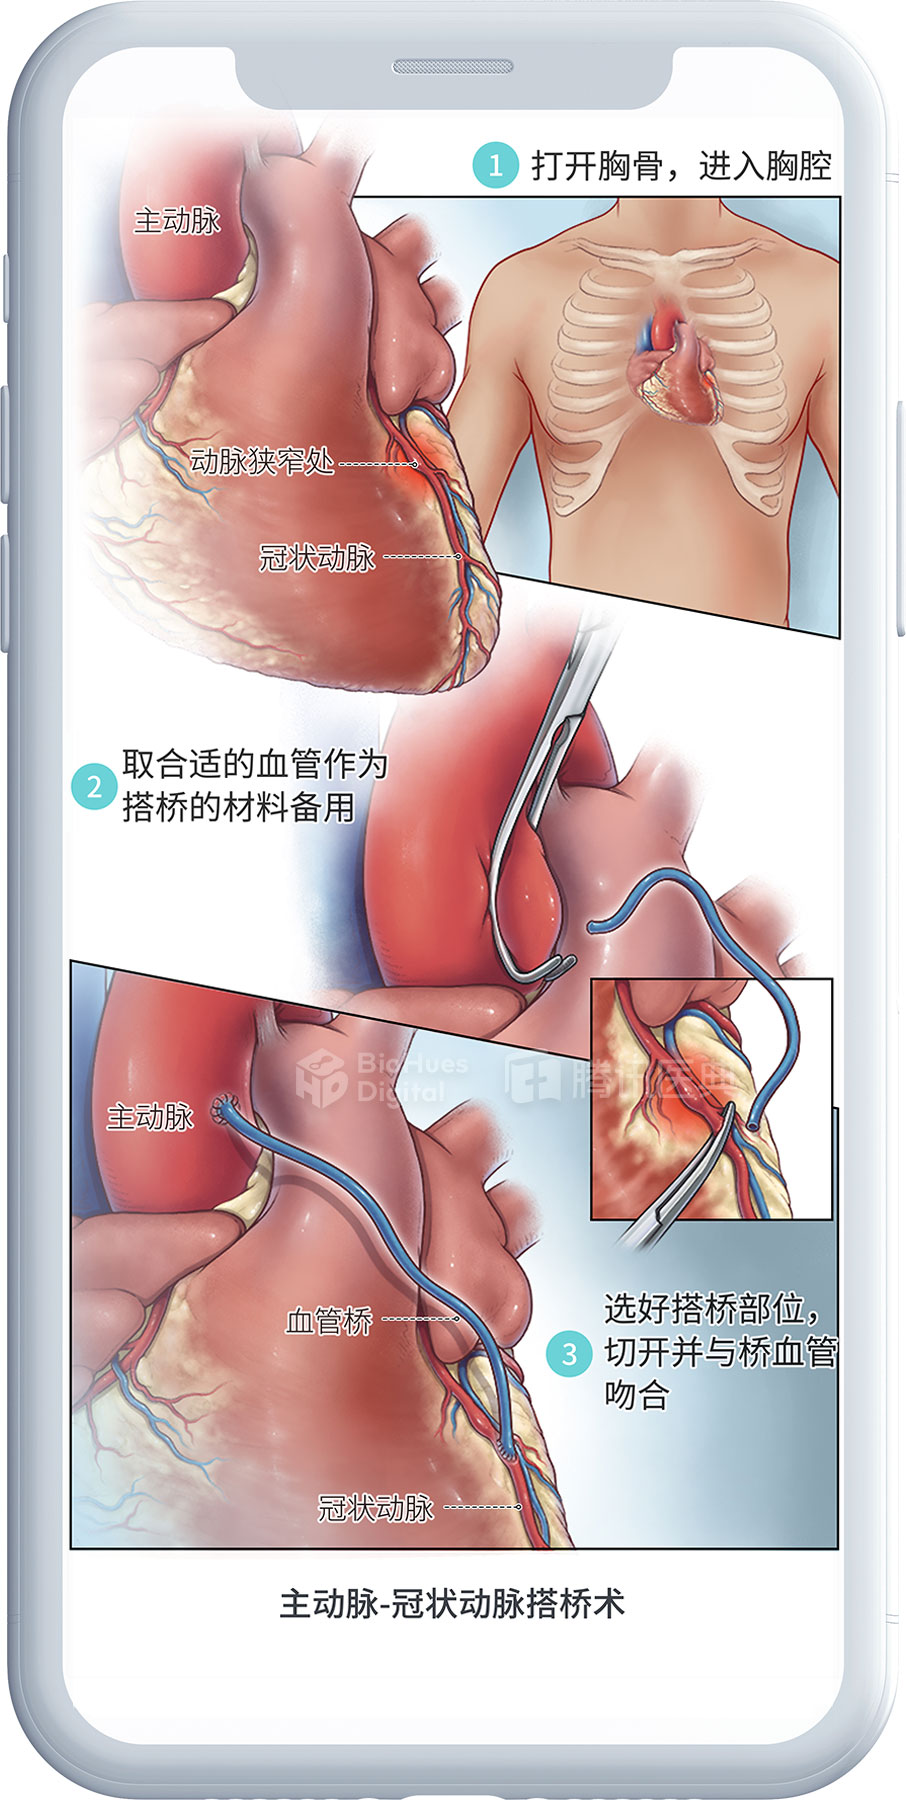 Medical illustration of coronary artery bypass surgery